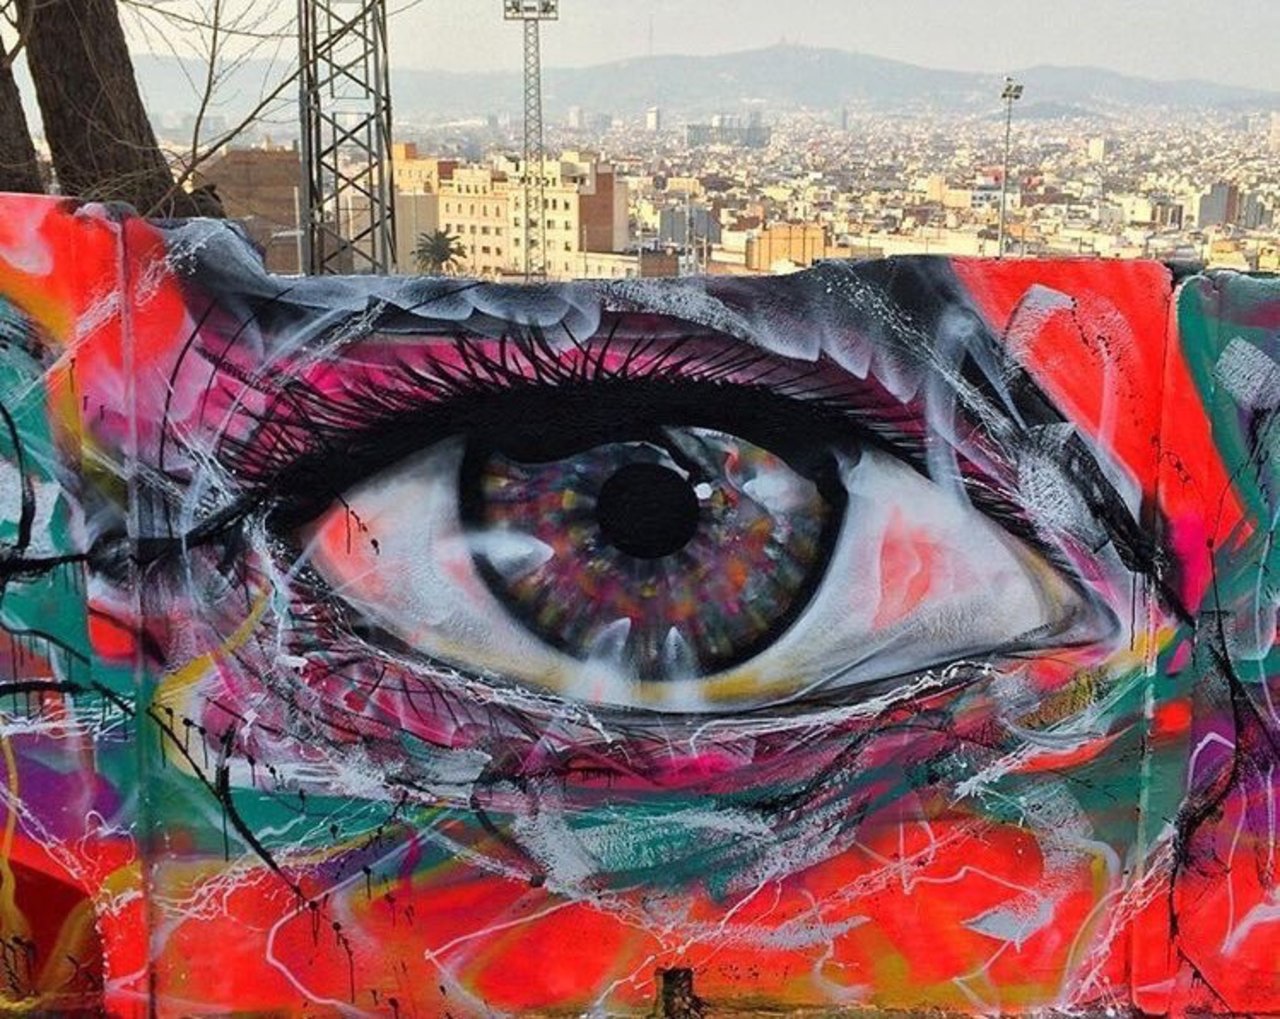 #mural by L7m #Barcelona #Spain#art #graffiti #streetart https://t.co/A8FI3wsCEV